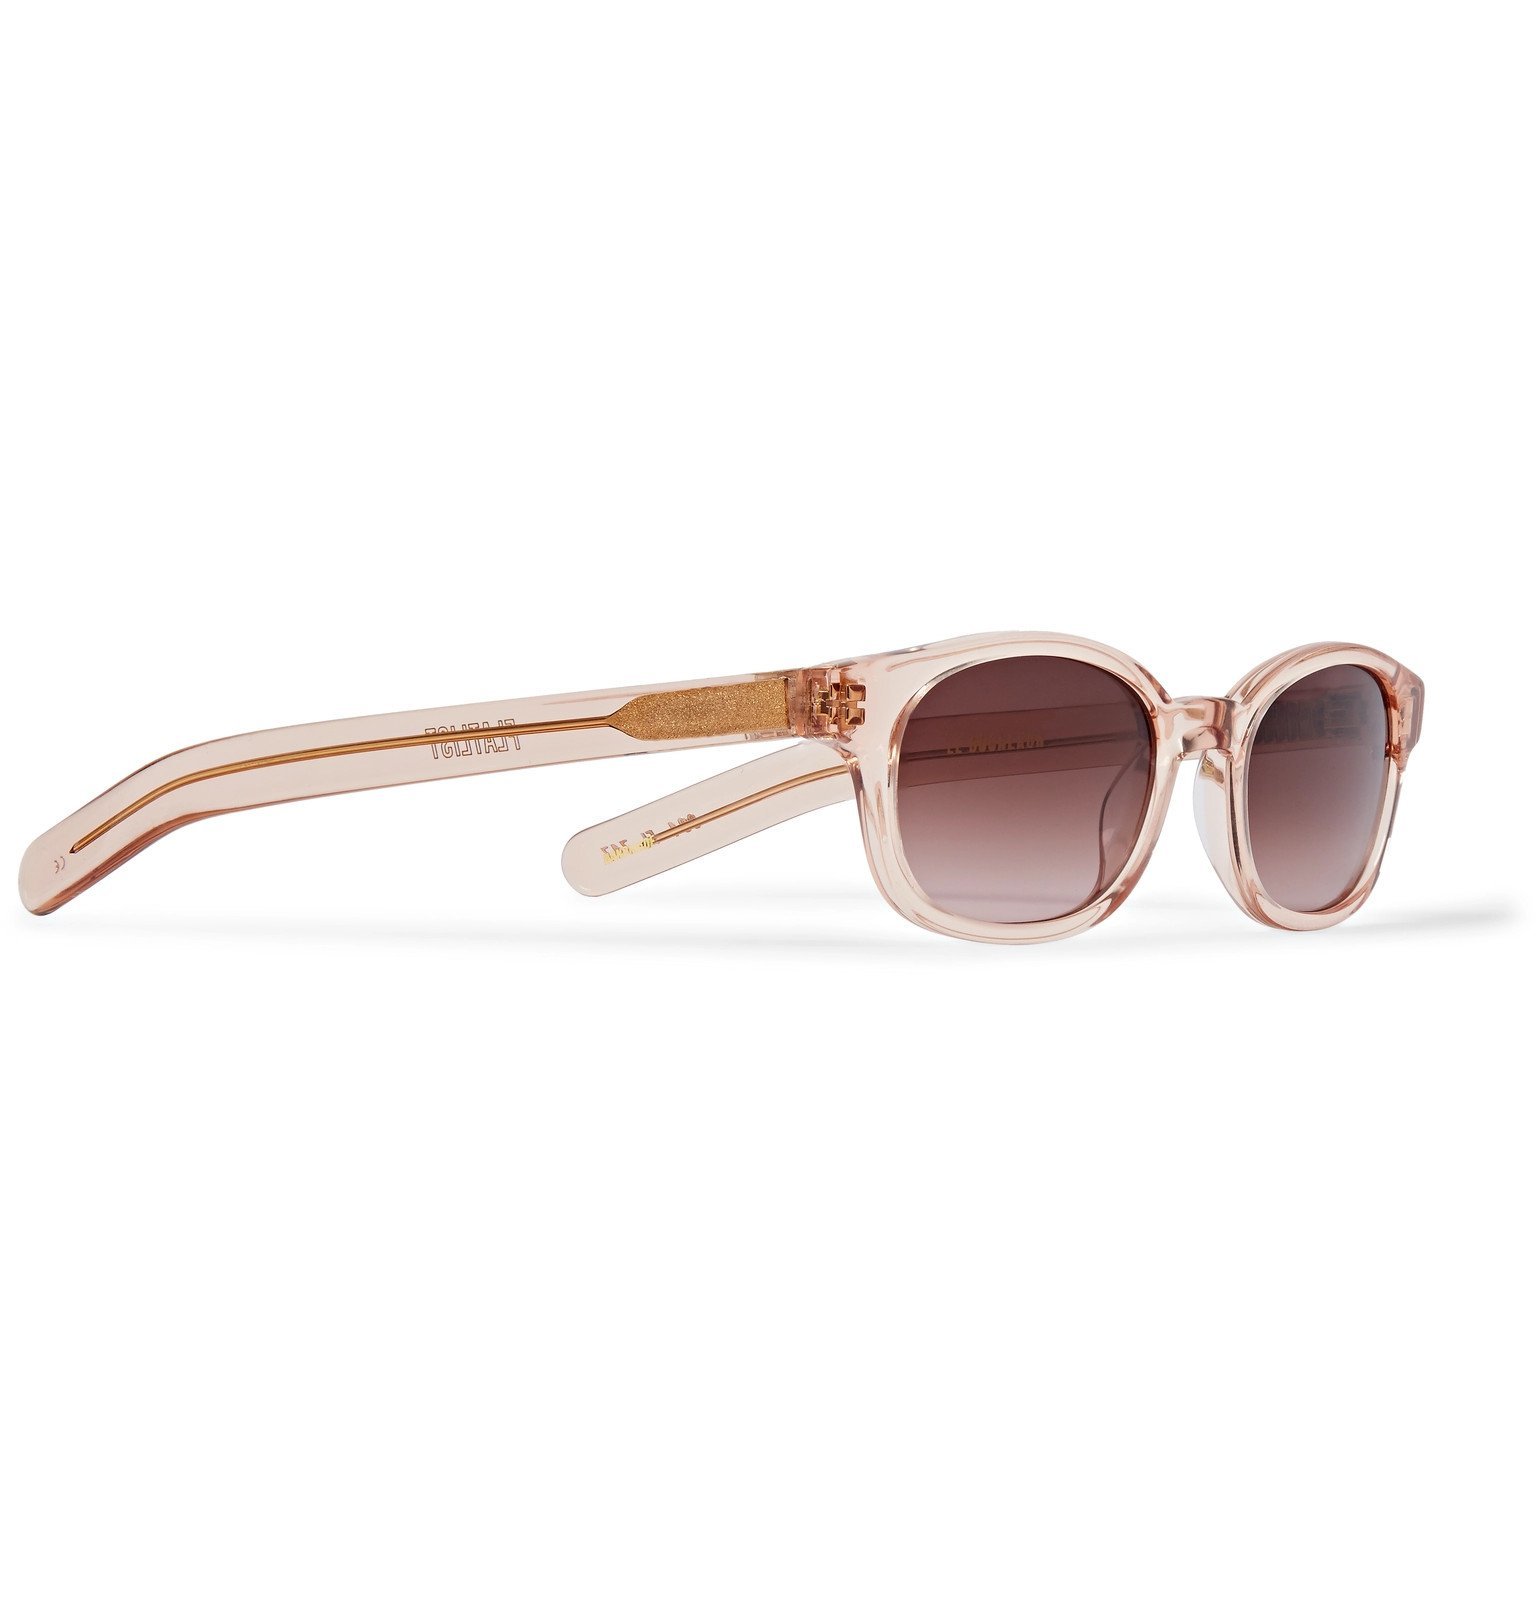 FLATLIST - Le Bucheron Rectangle-Frame Acetate Sunglasses - Pink